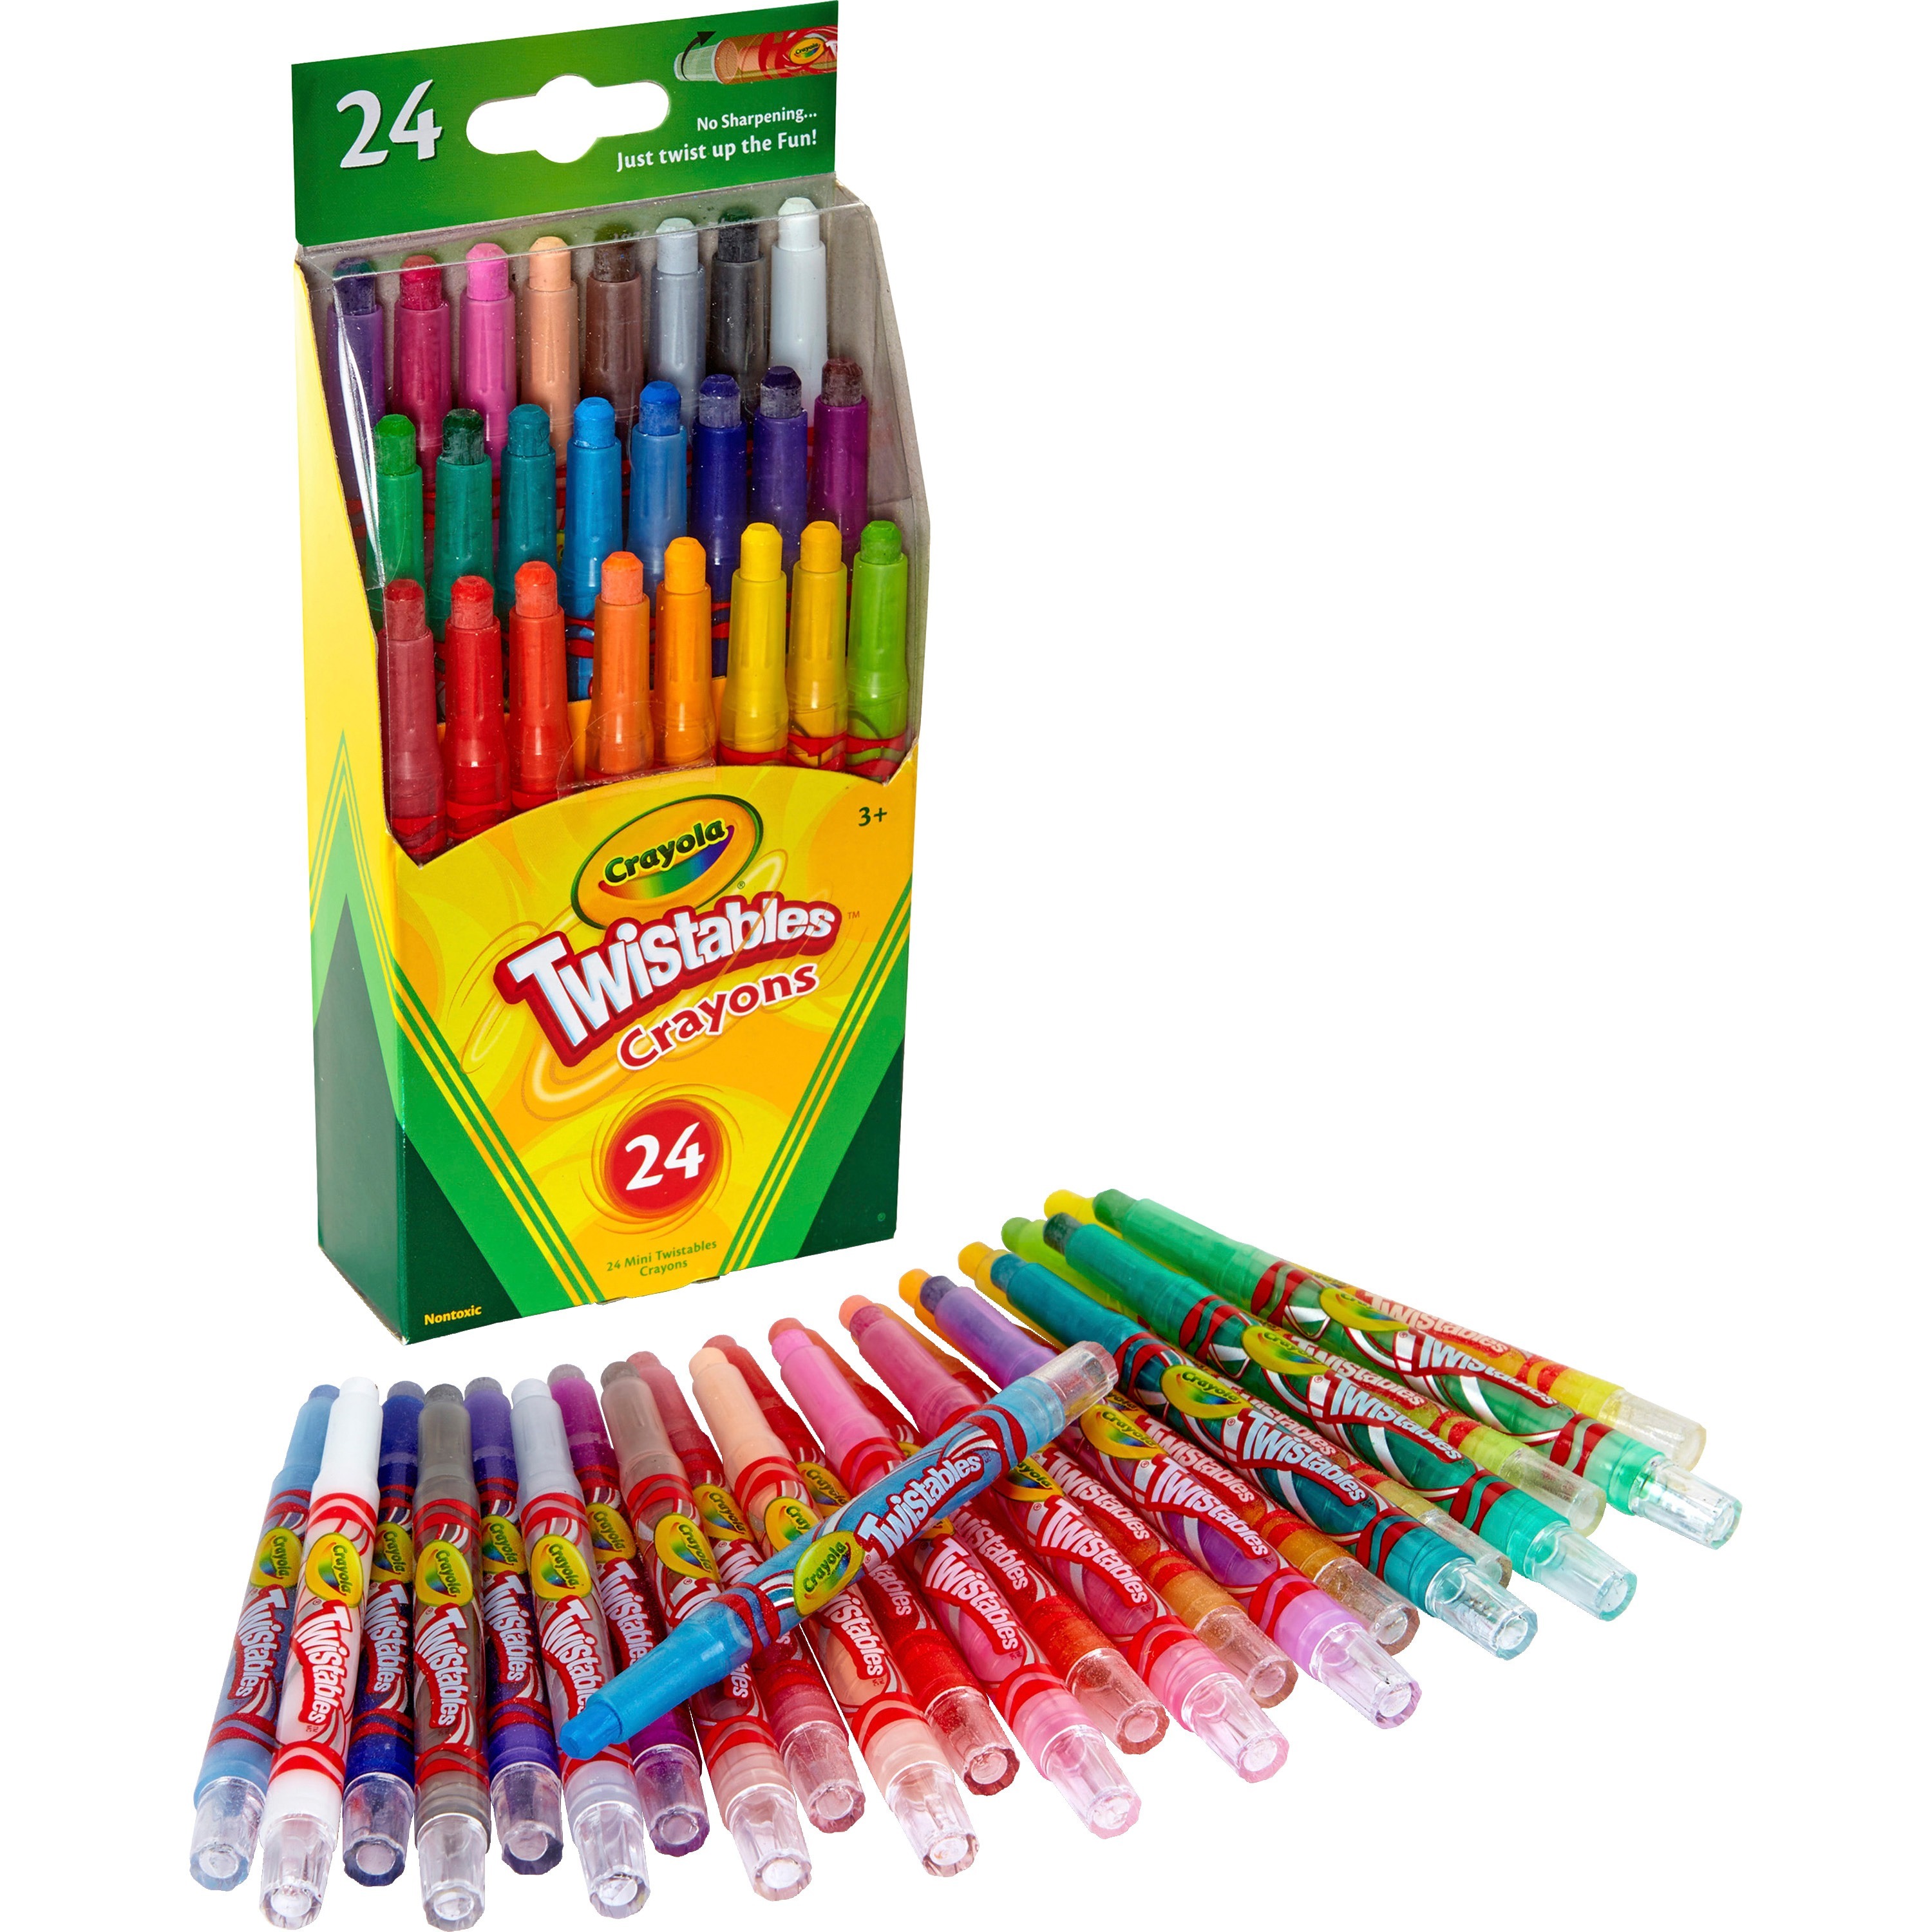 Crayola Twistables Crayons require no peeling or sharpening, just